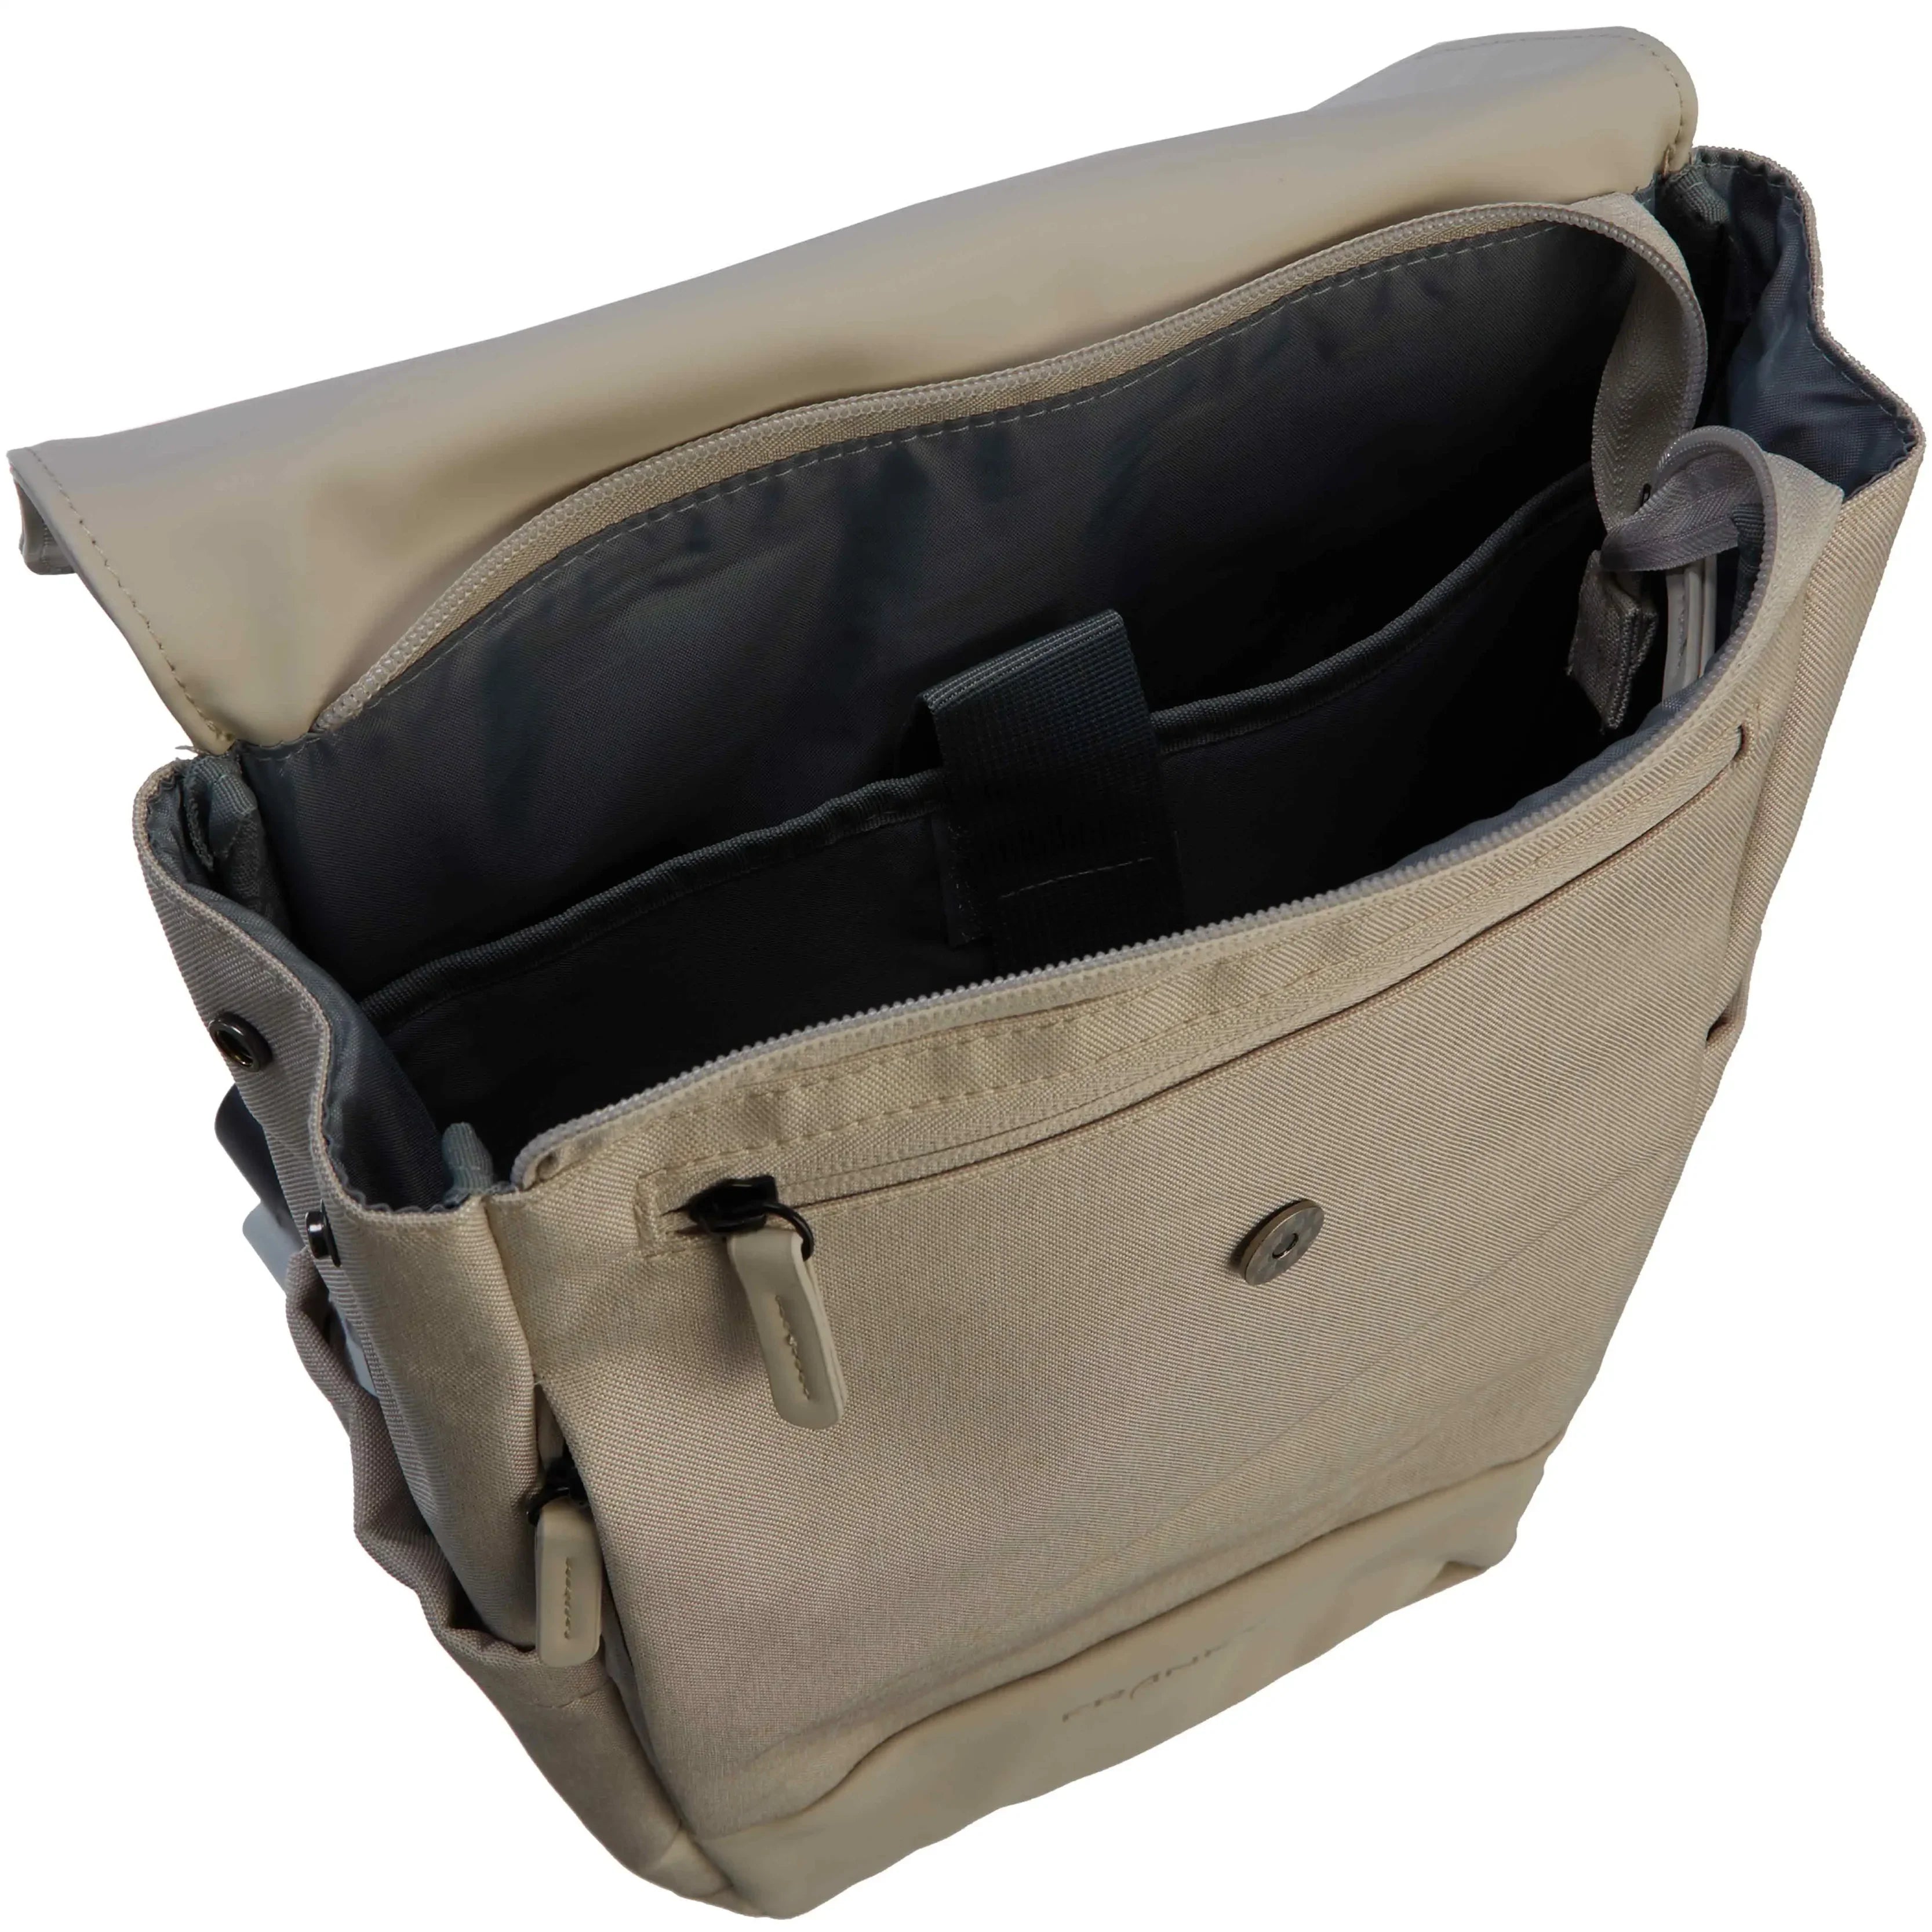 koffer-direkt.de Leisure backpack 42 cm - beige